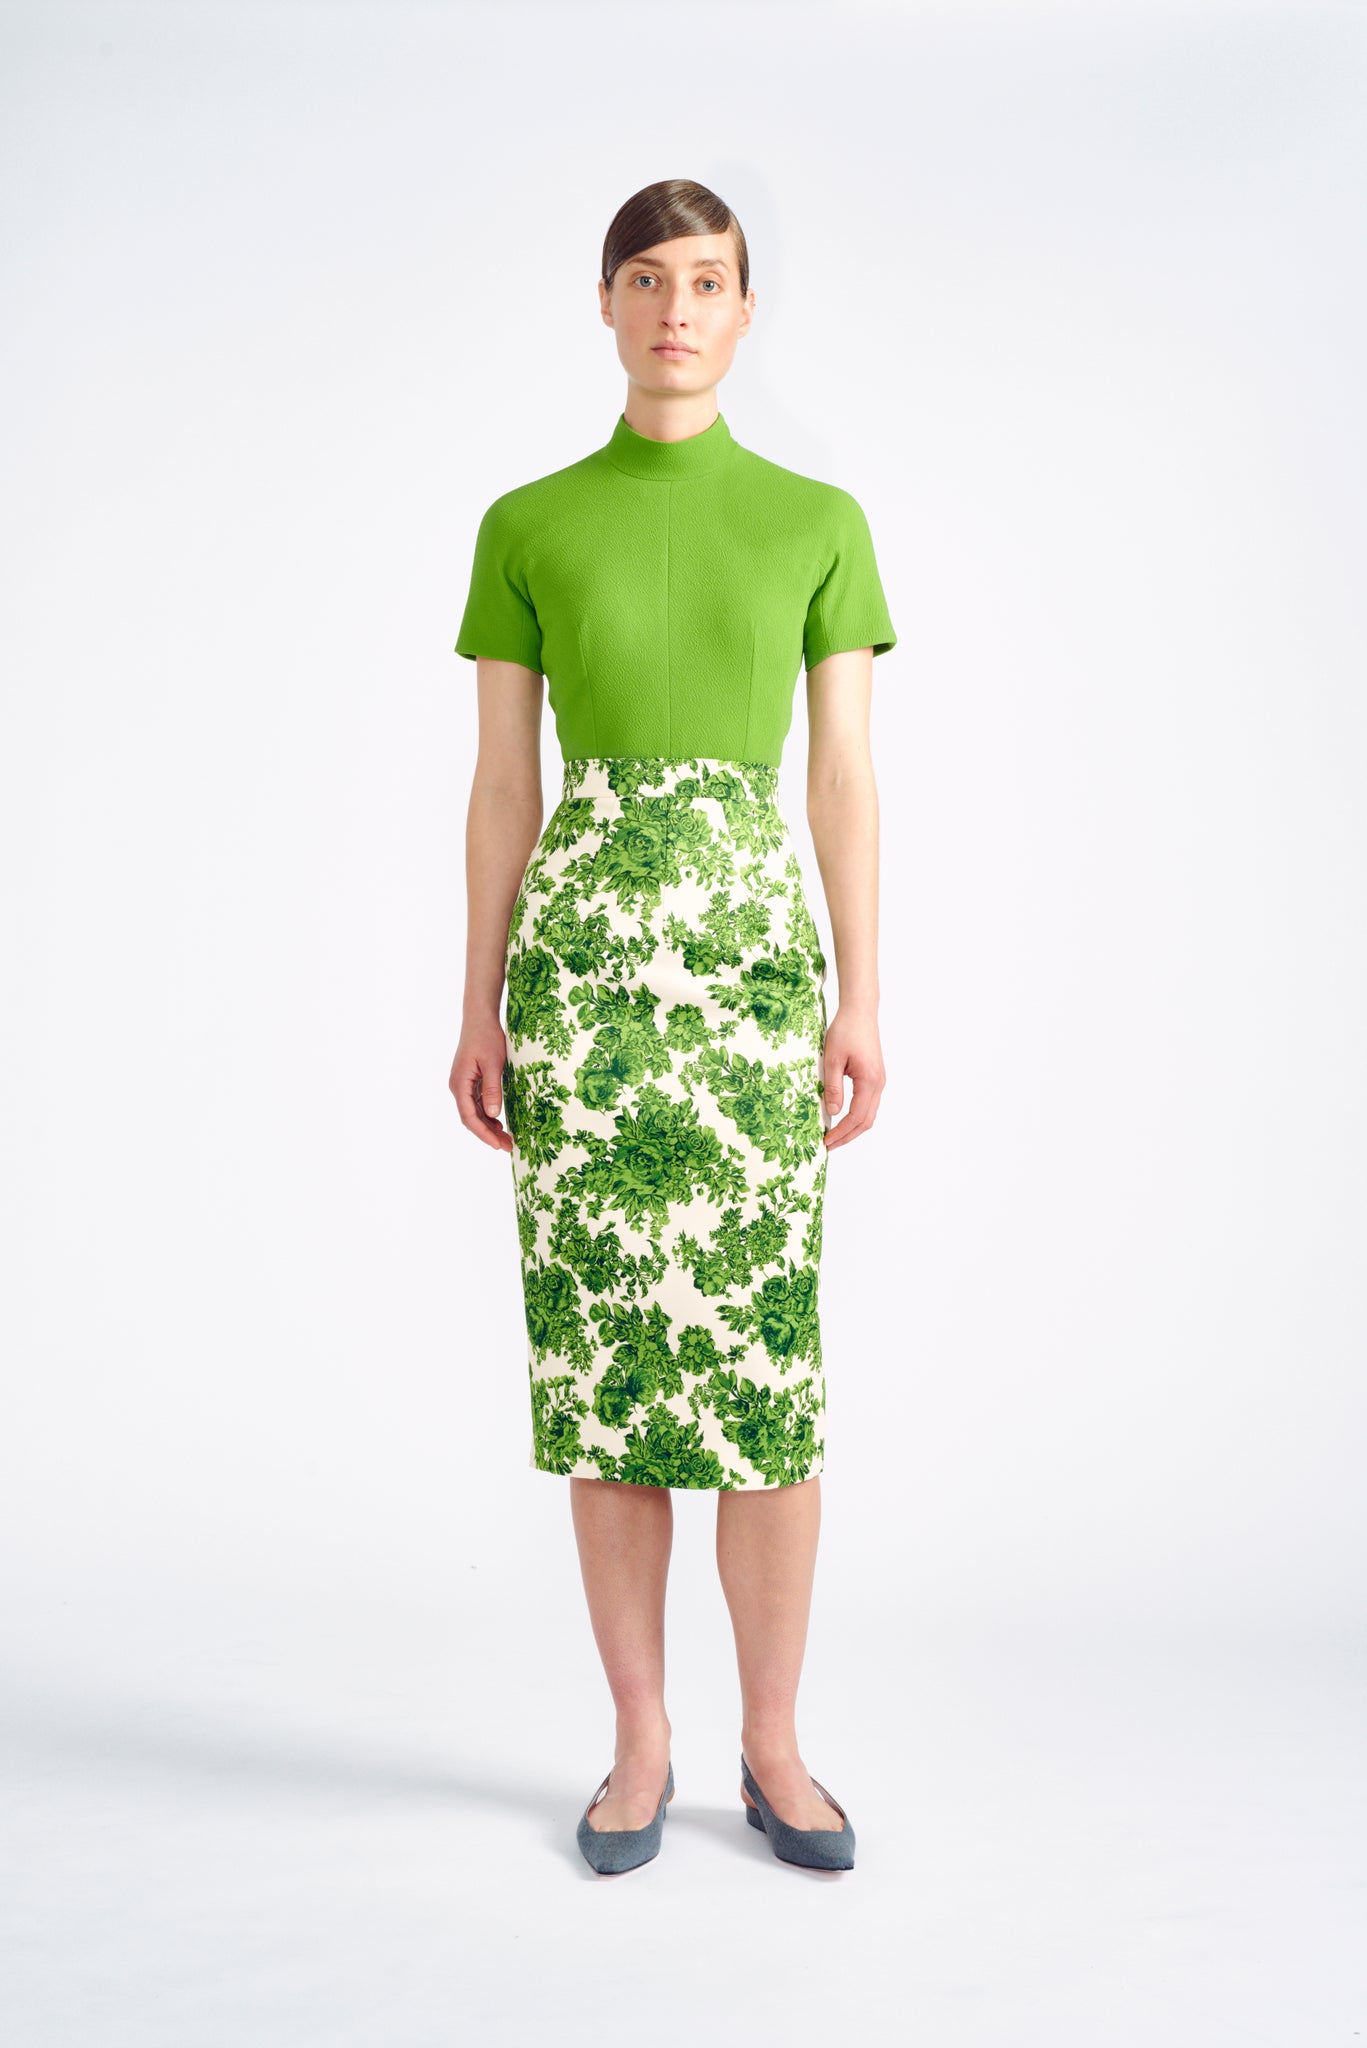 Emilia Wickstead Loreleri skirt - Green rose floral print pencil skirt